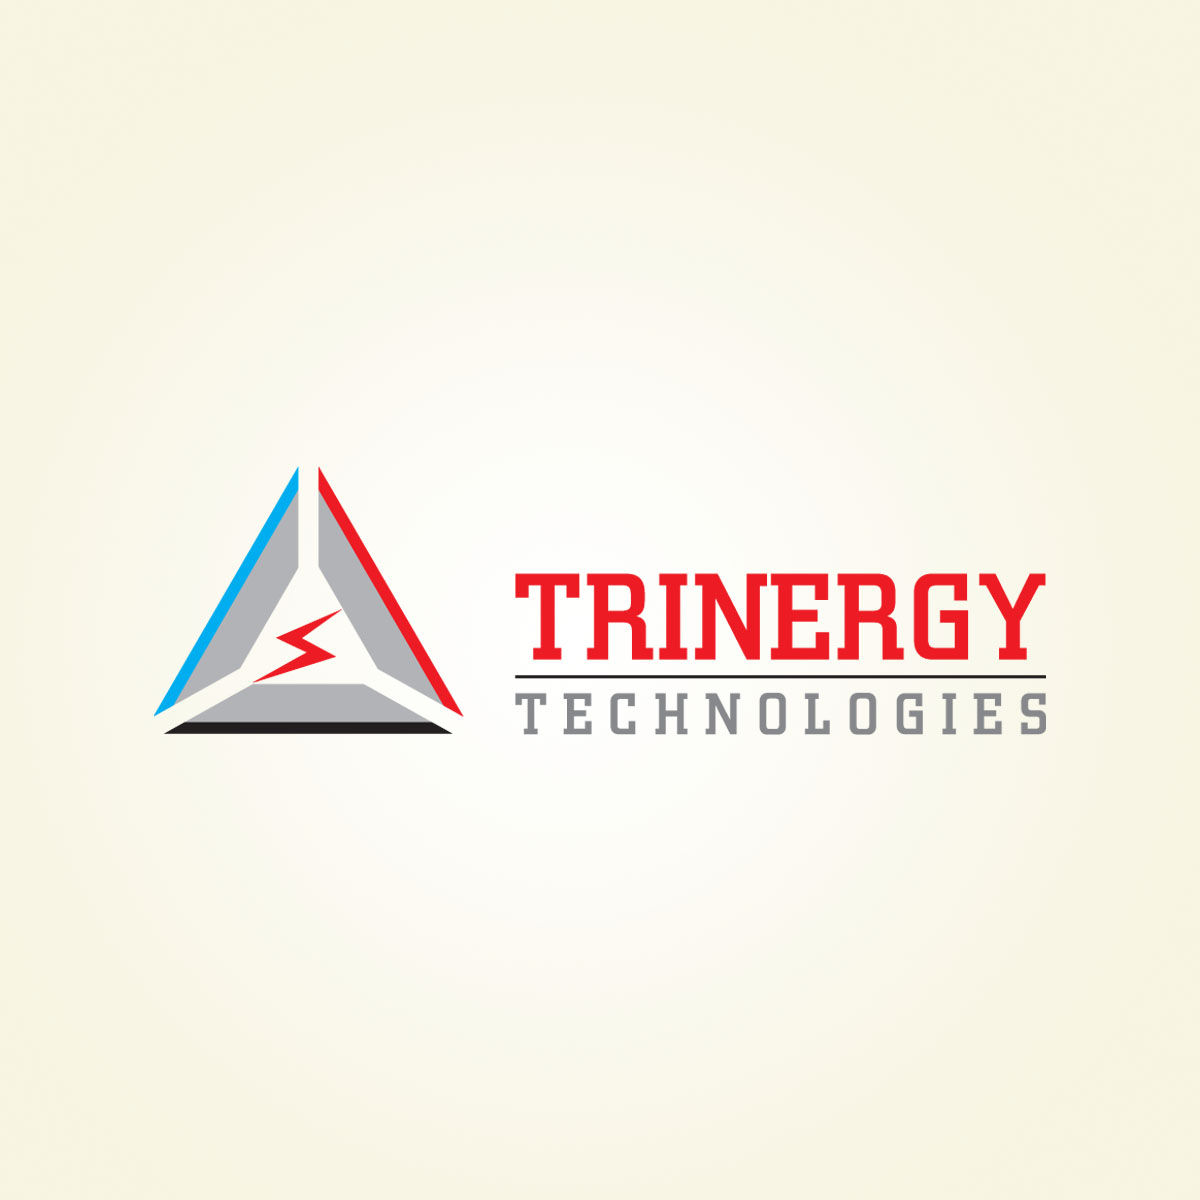 Trinergy Technologies